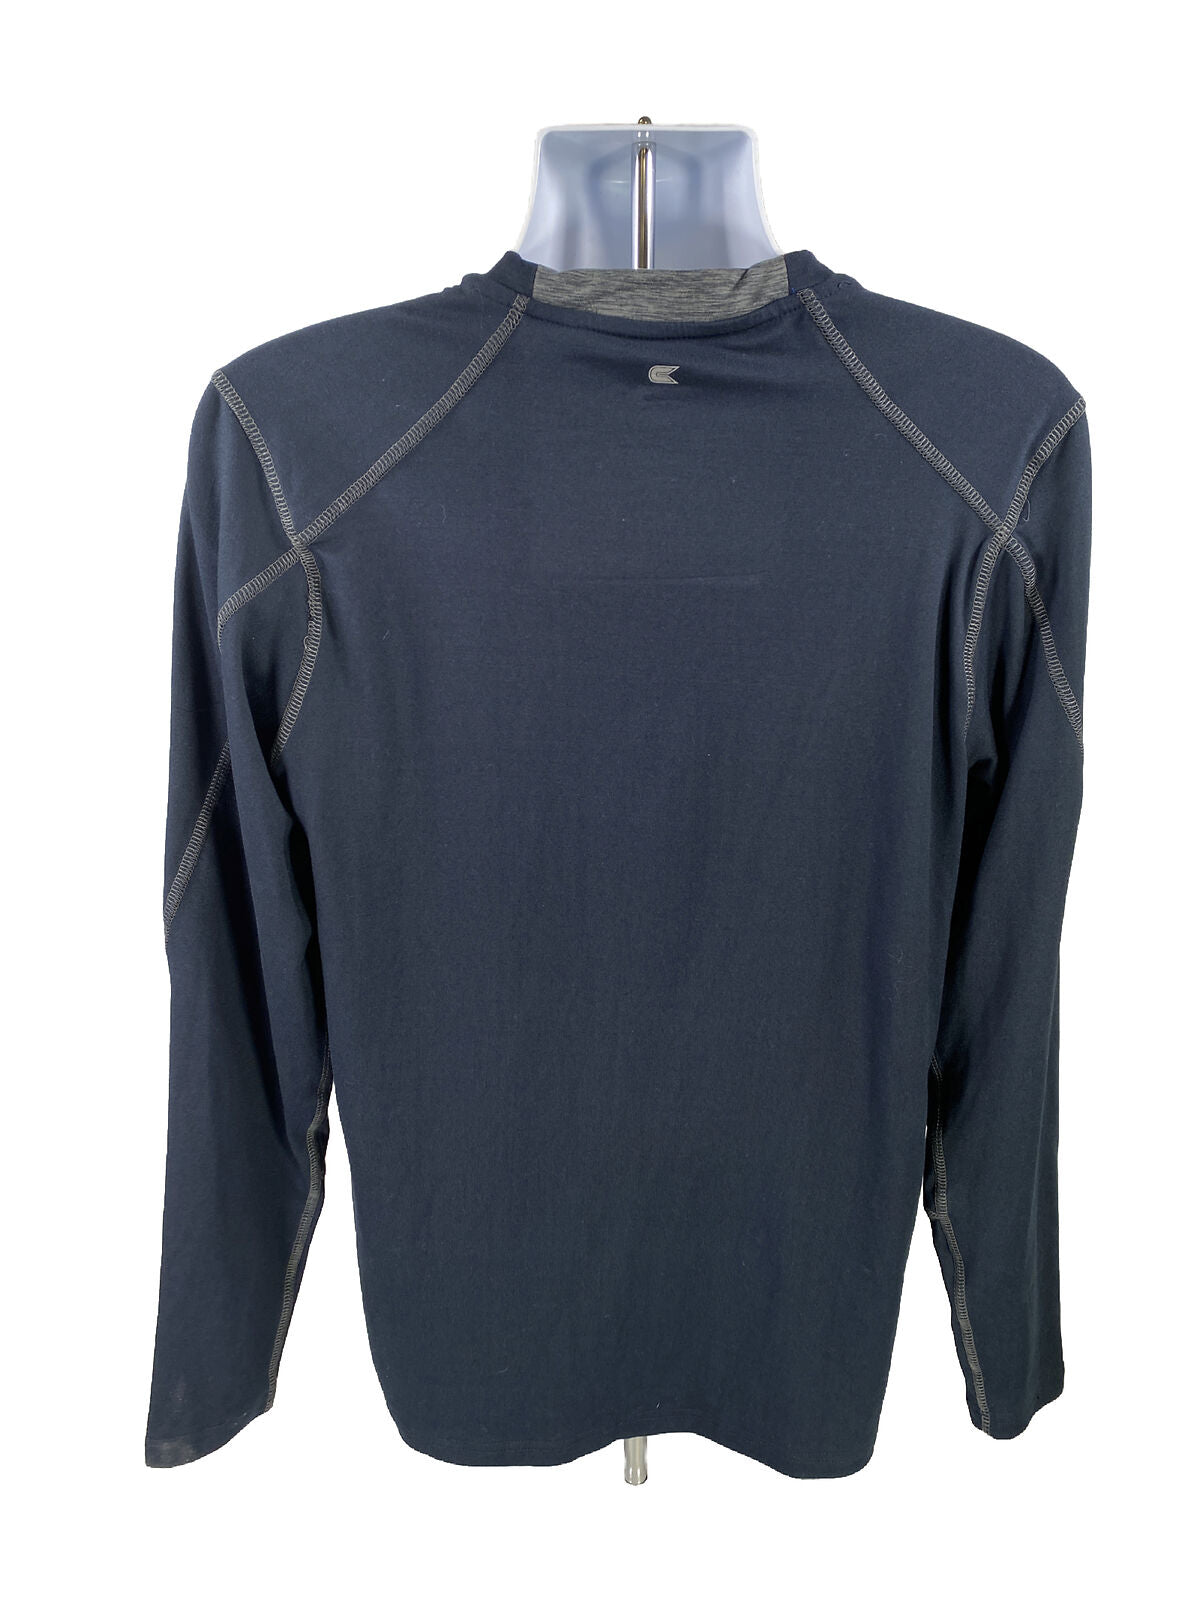 Colesseum Men's Blue University of Michigan Long Sleeve Shirt - M